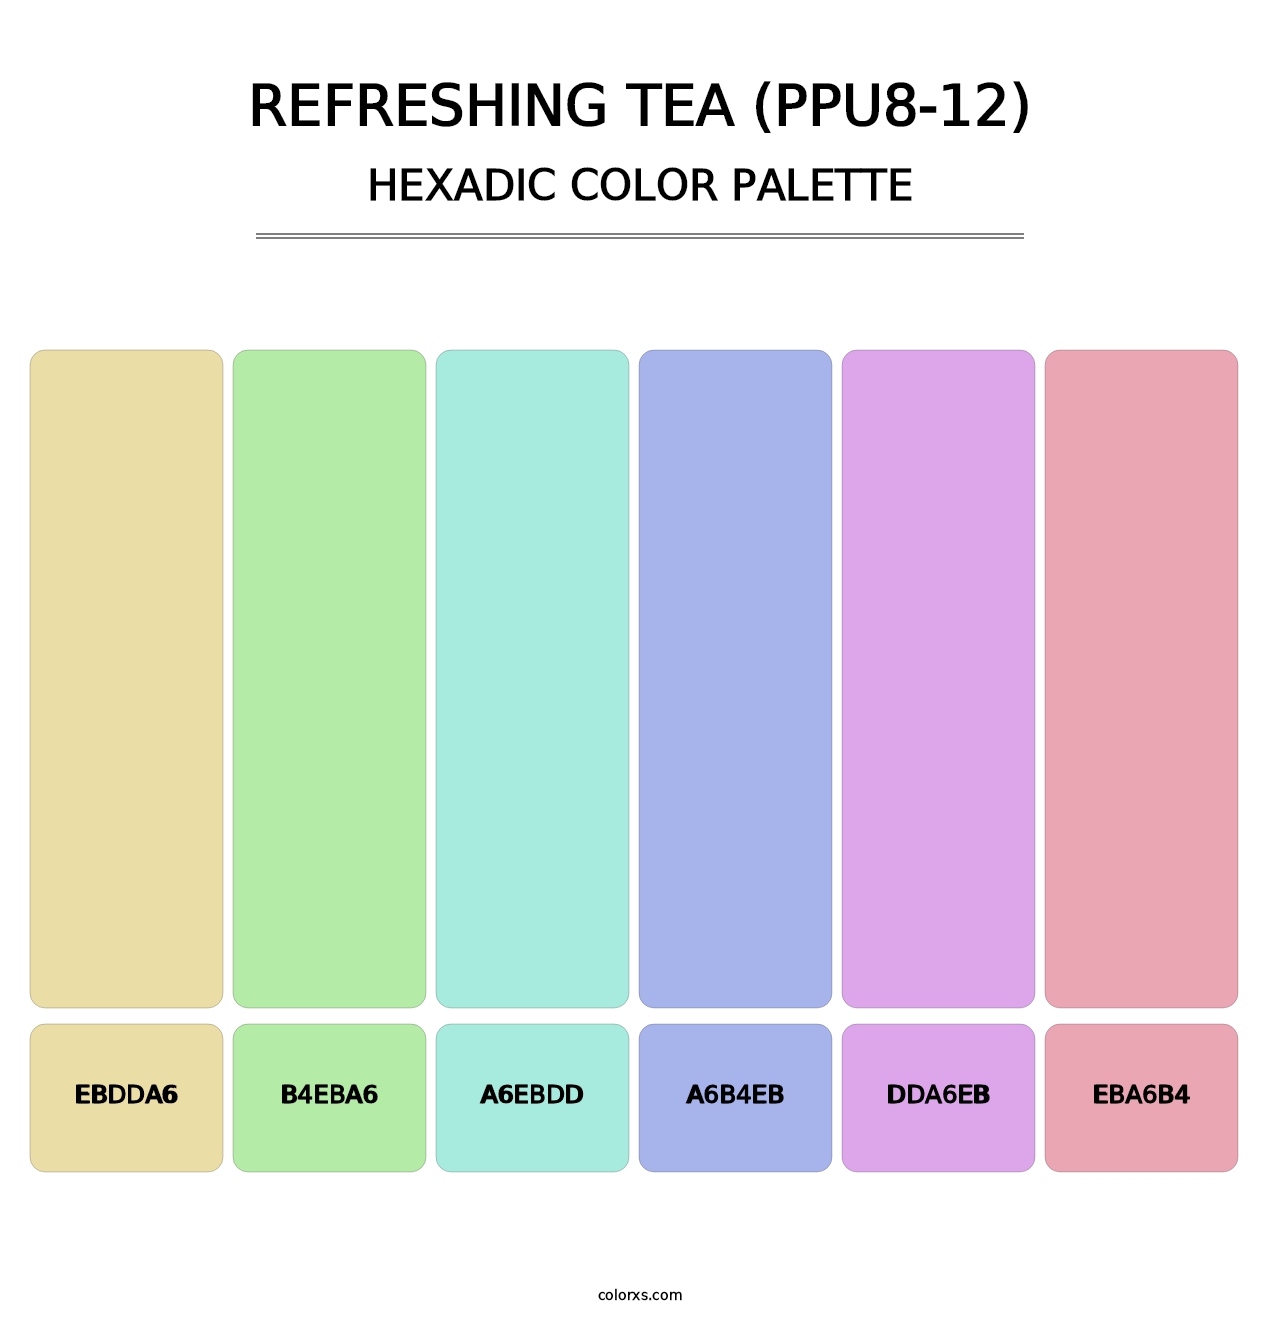 Refreshing Tea (PPU8-12) - Hexadic Color Palette